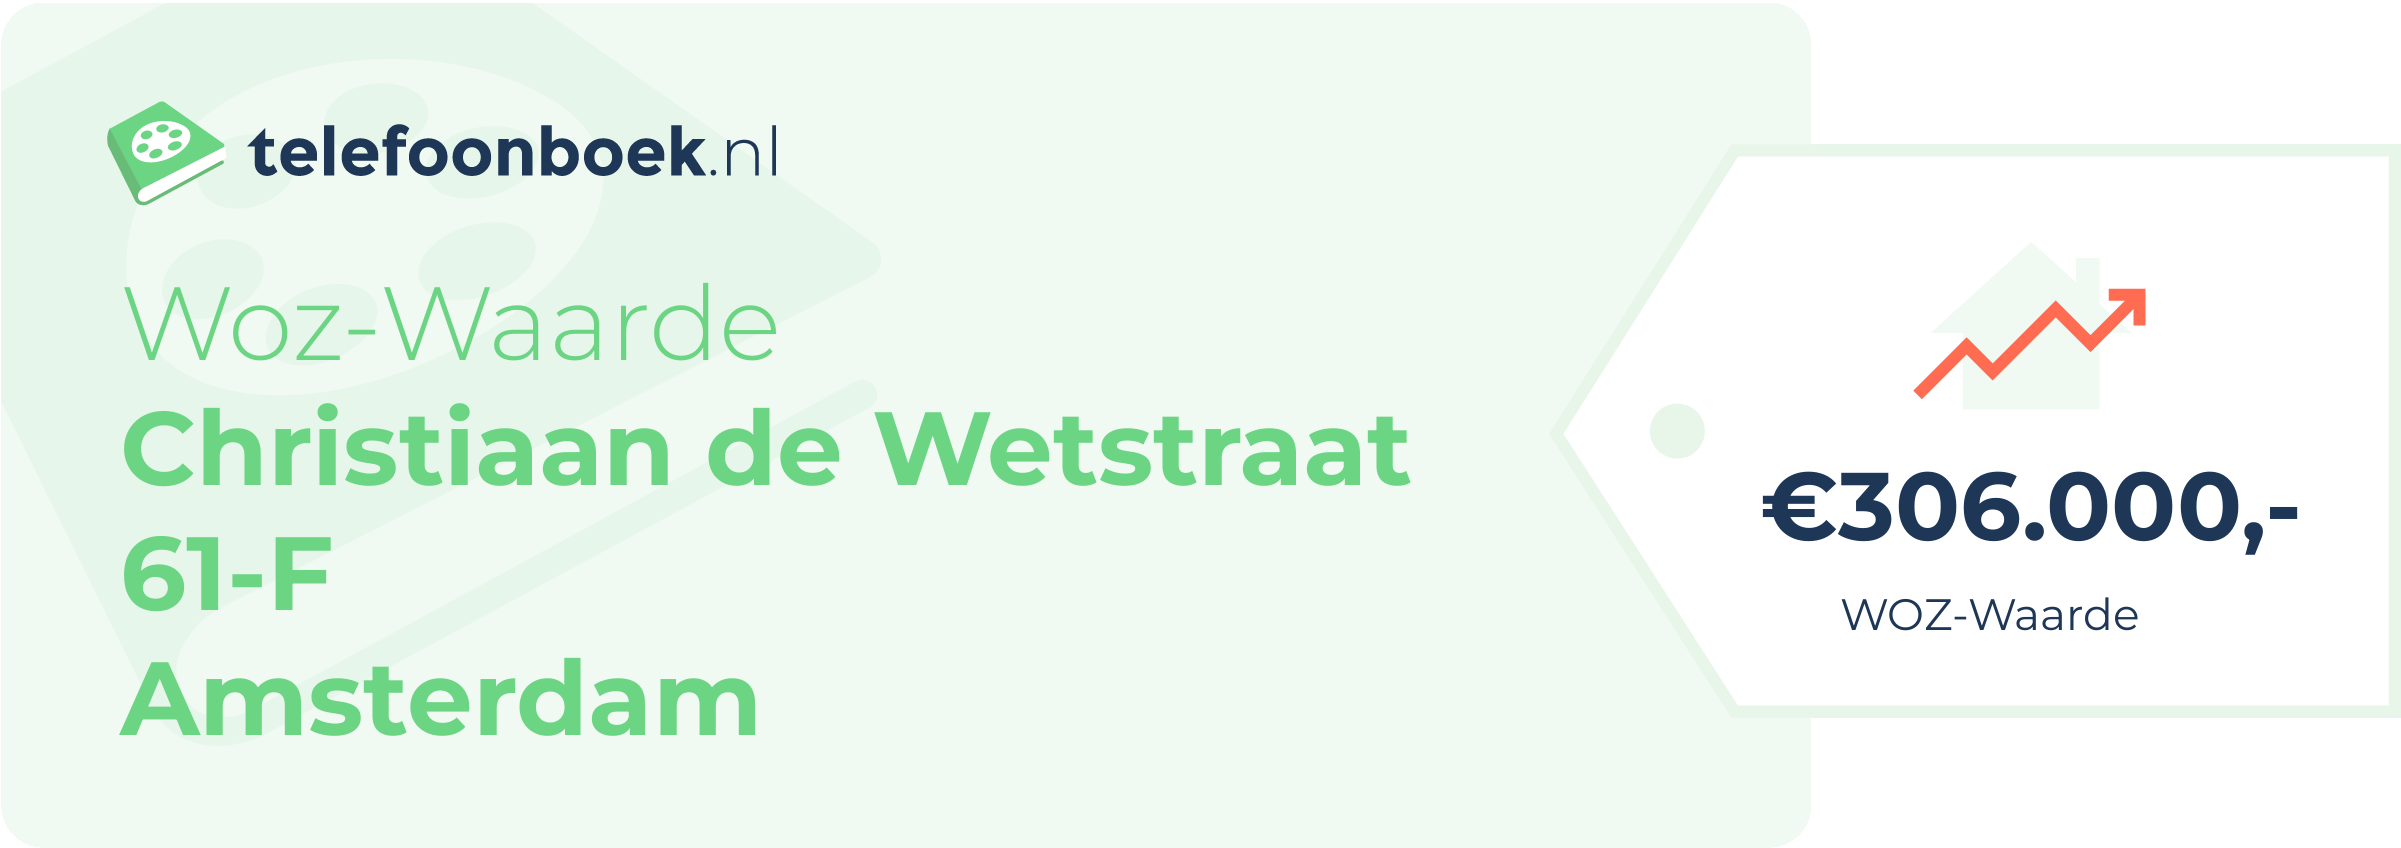 WOZ-waarde Christiaan De Wetstraat 61-F Amsterdam